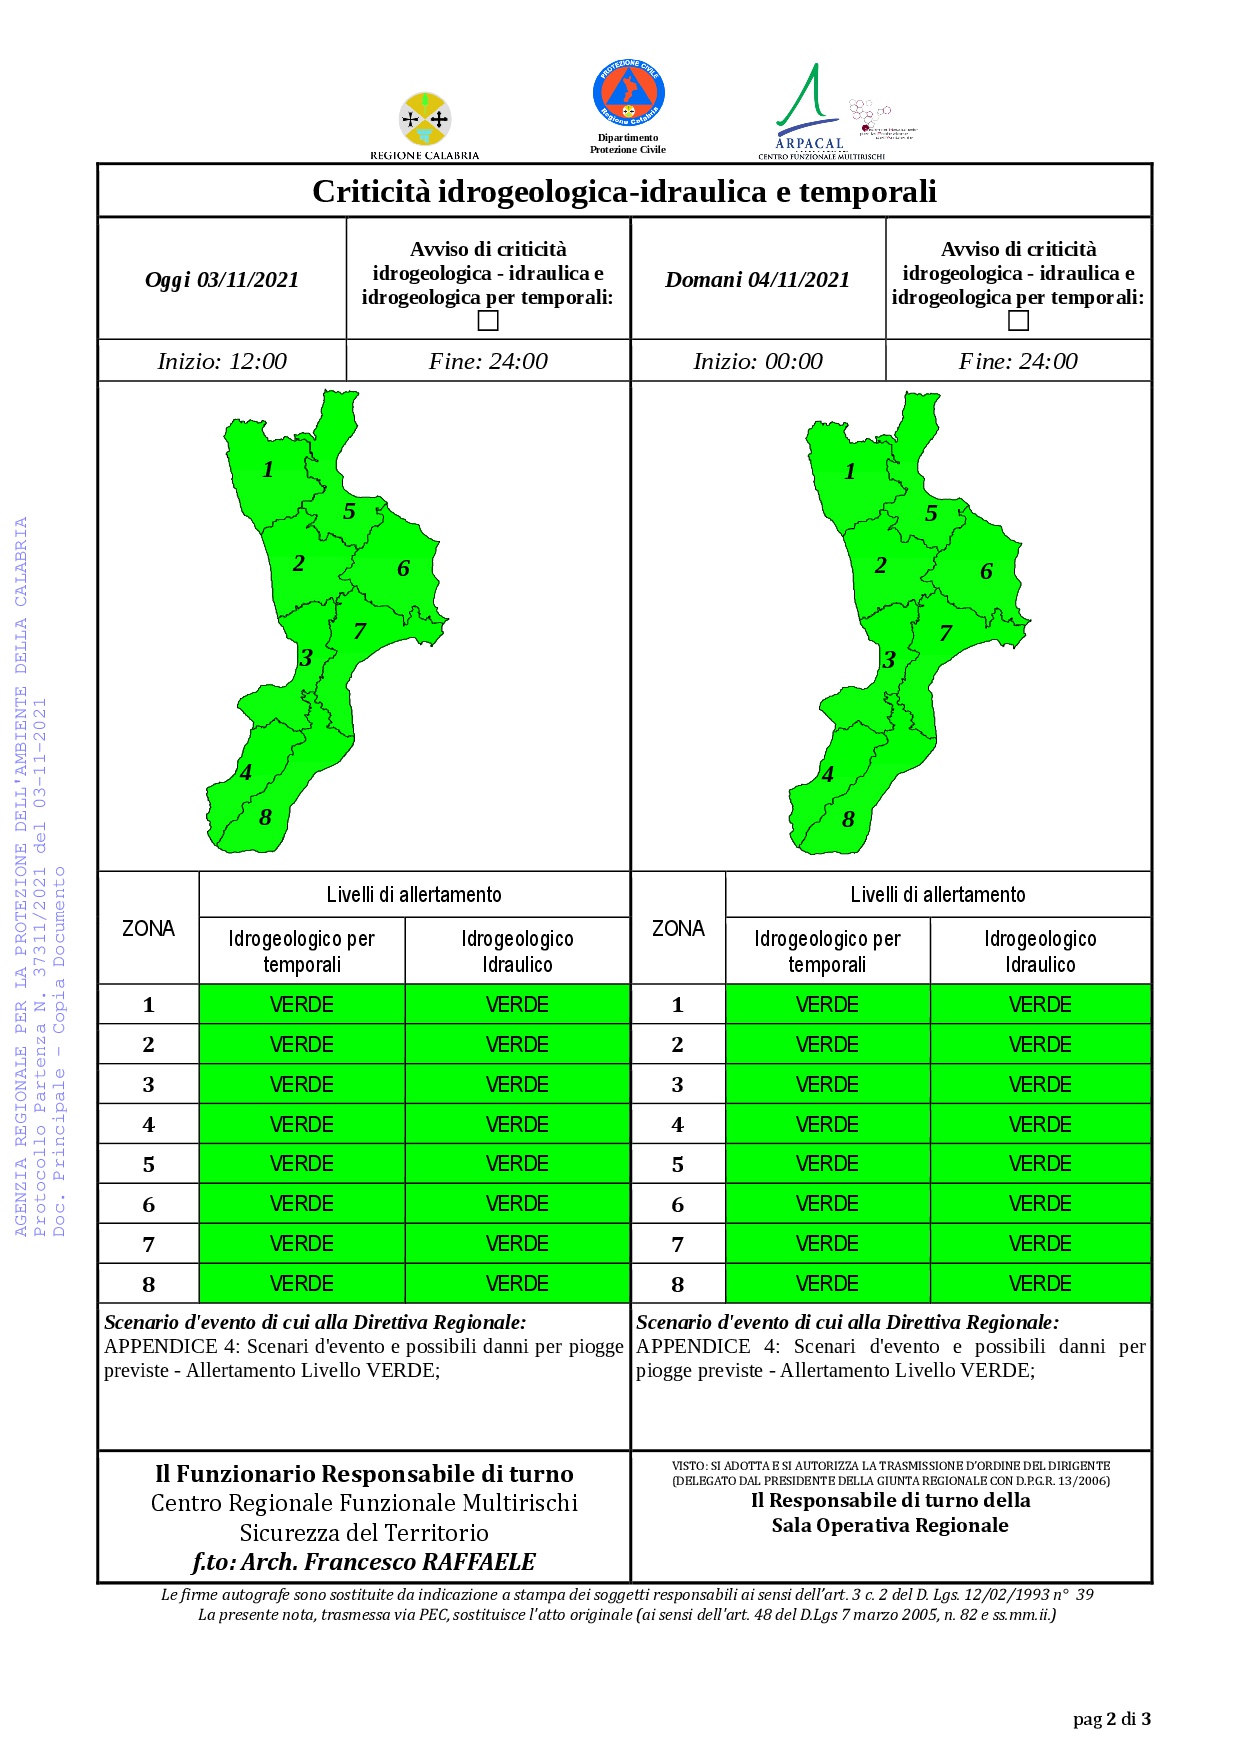 Criticità idrogeologica-idraulica e temporali in Calabria 03-11-2021